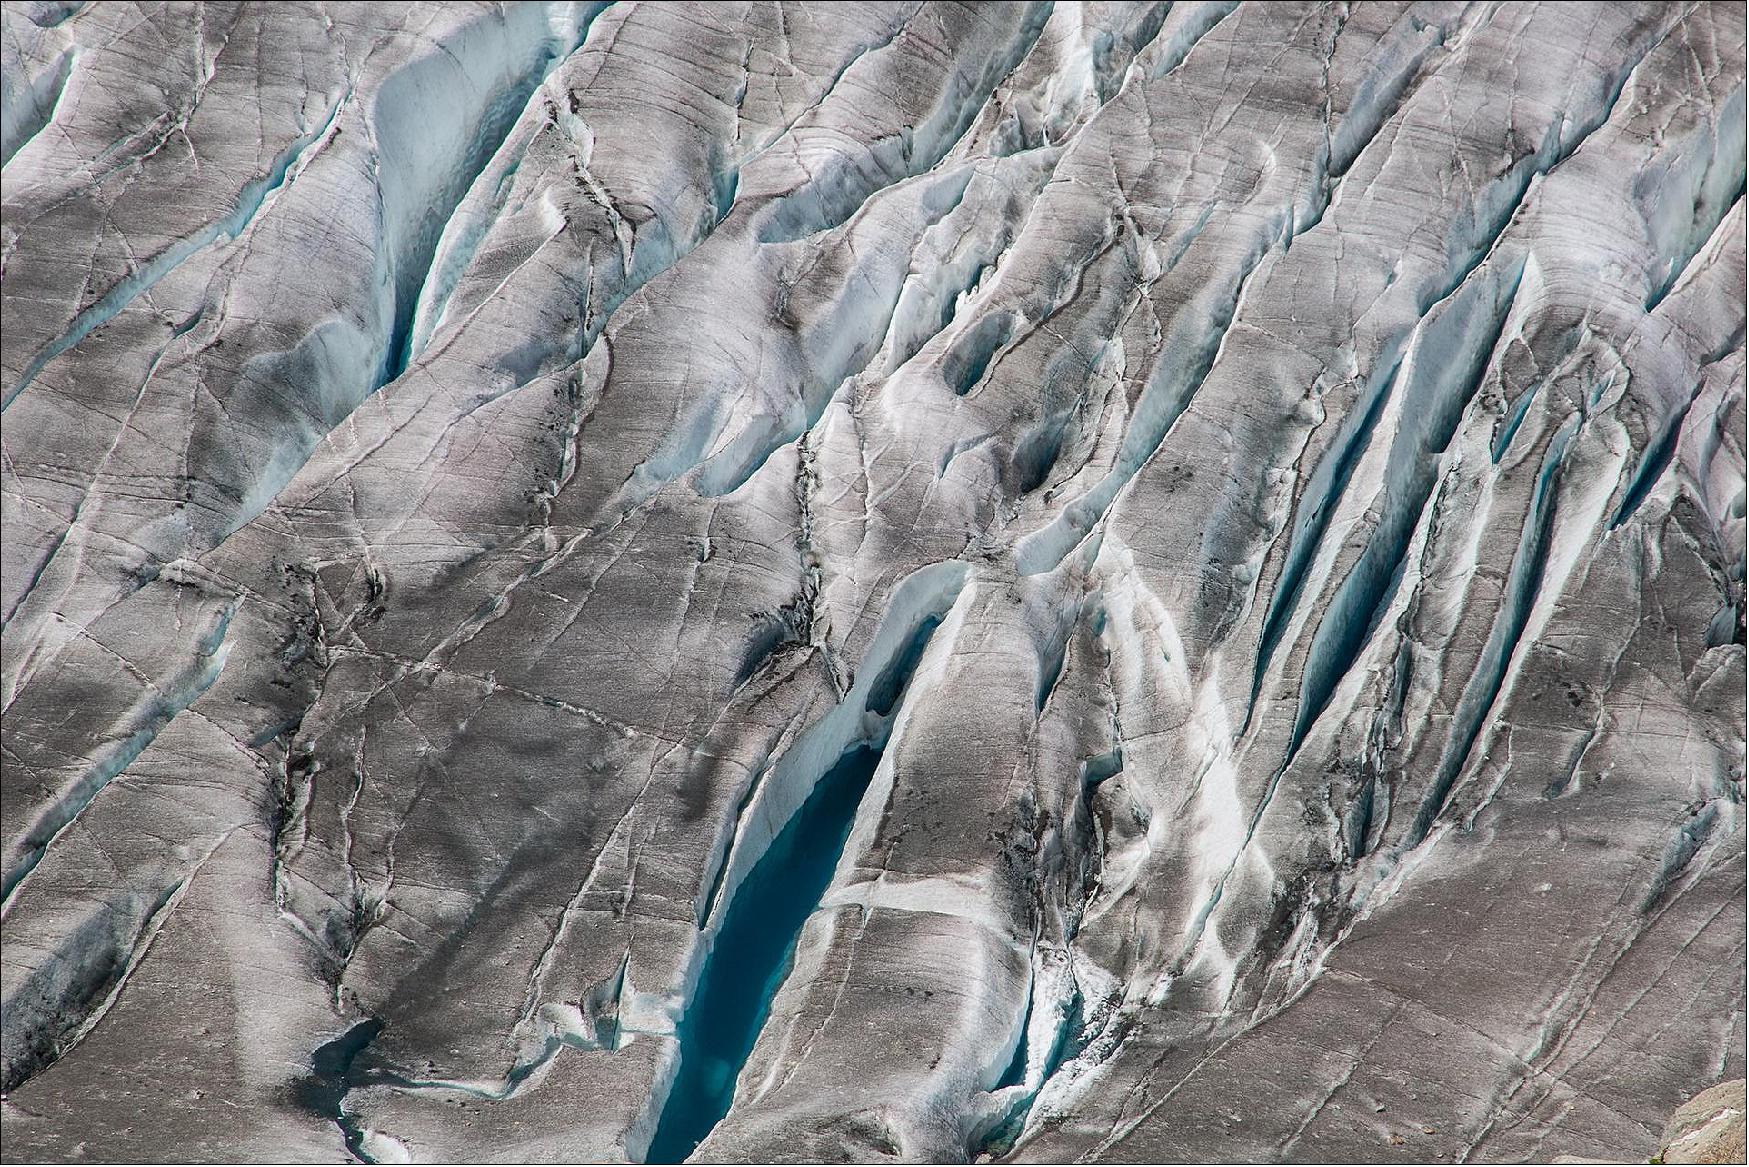 Figure 15: Crevasses on the Aletsch Glacier (image credit: Christian Sommer)